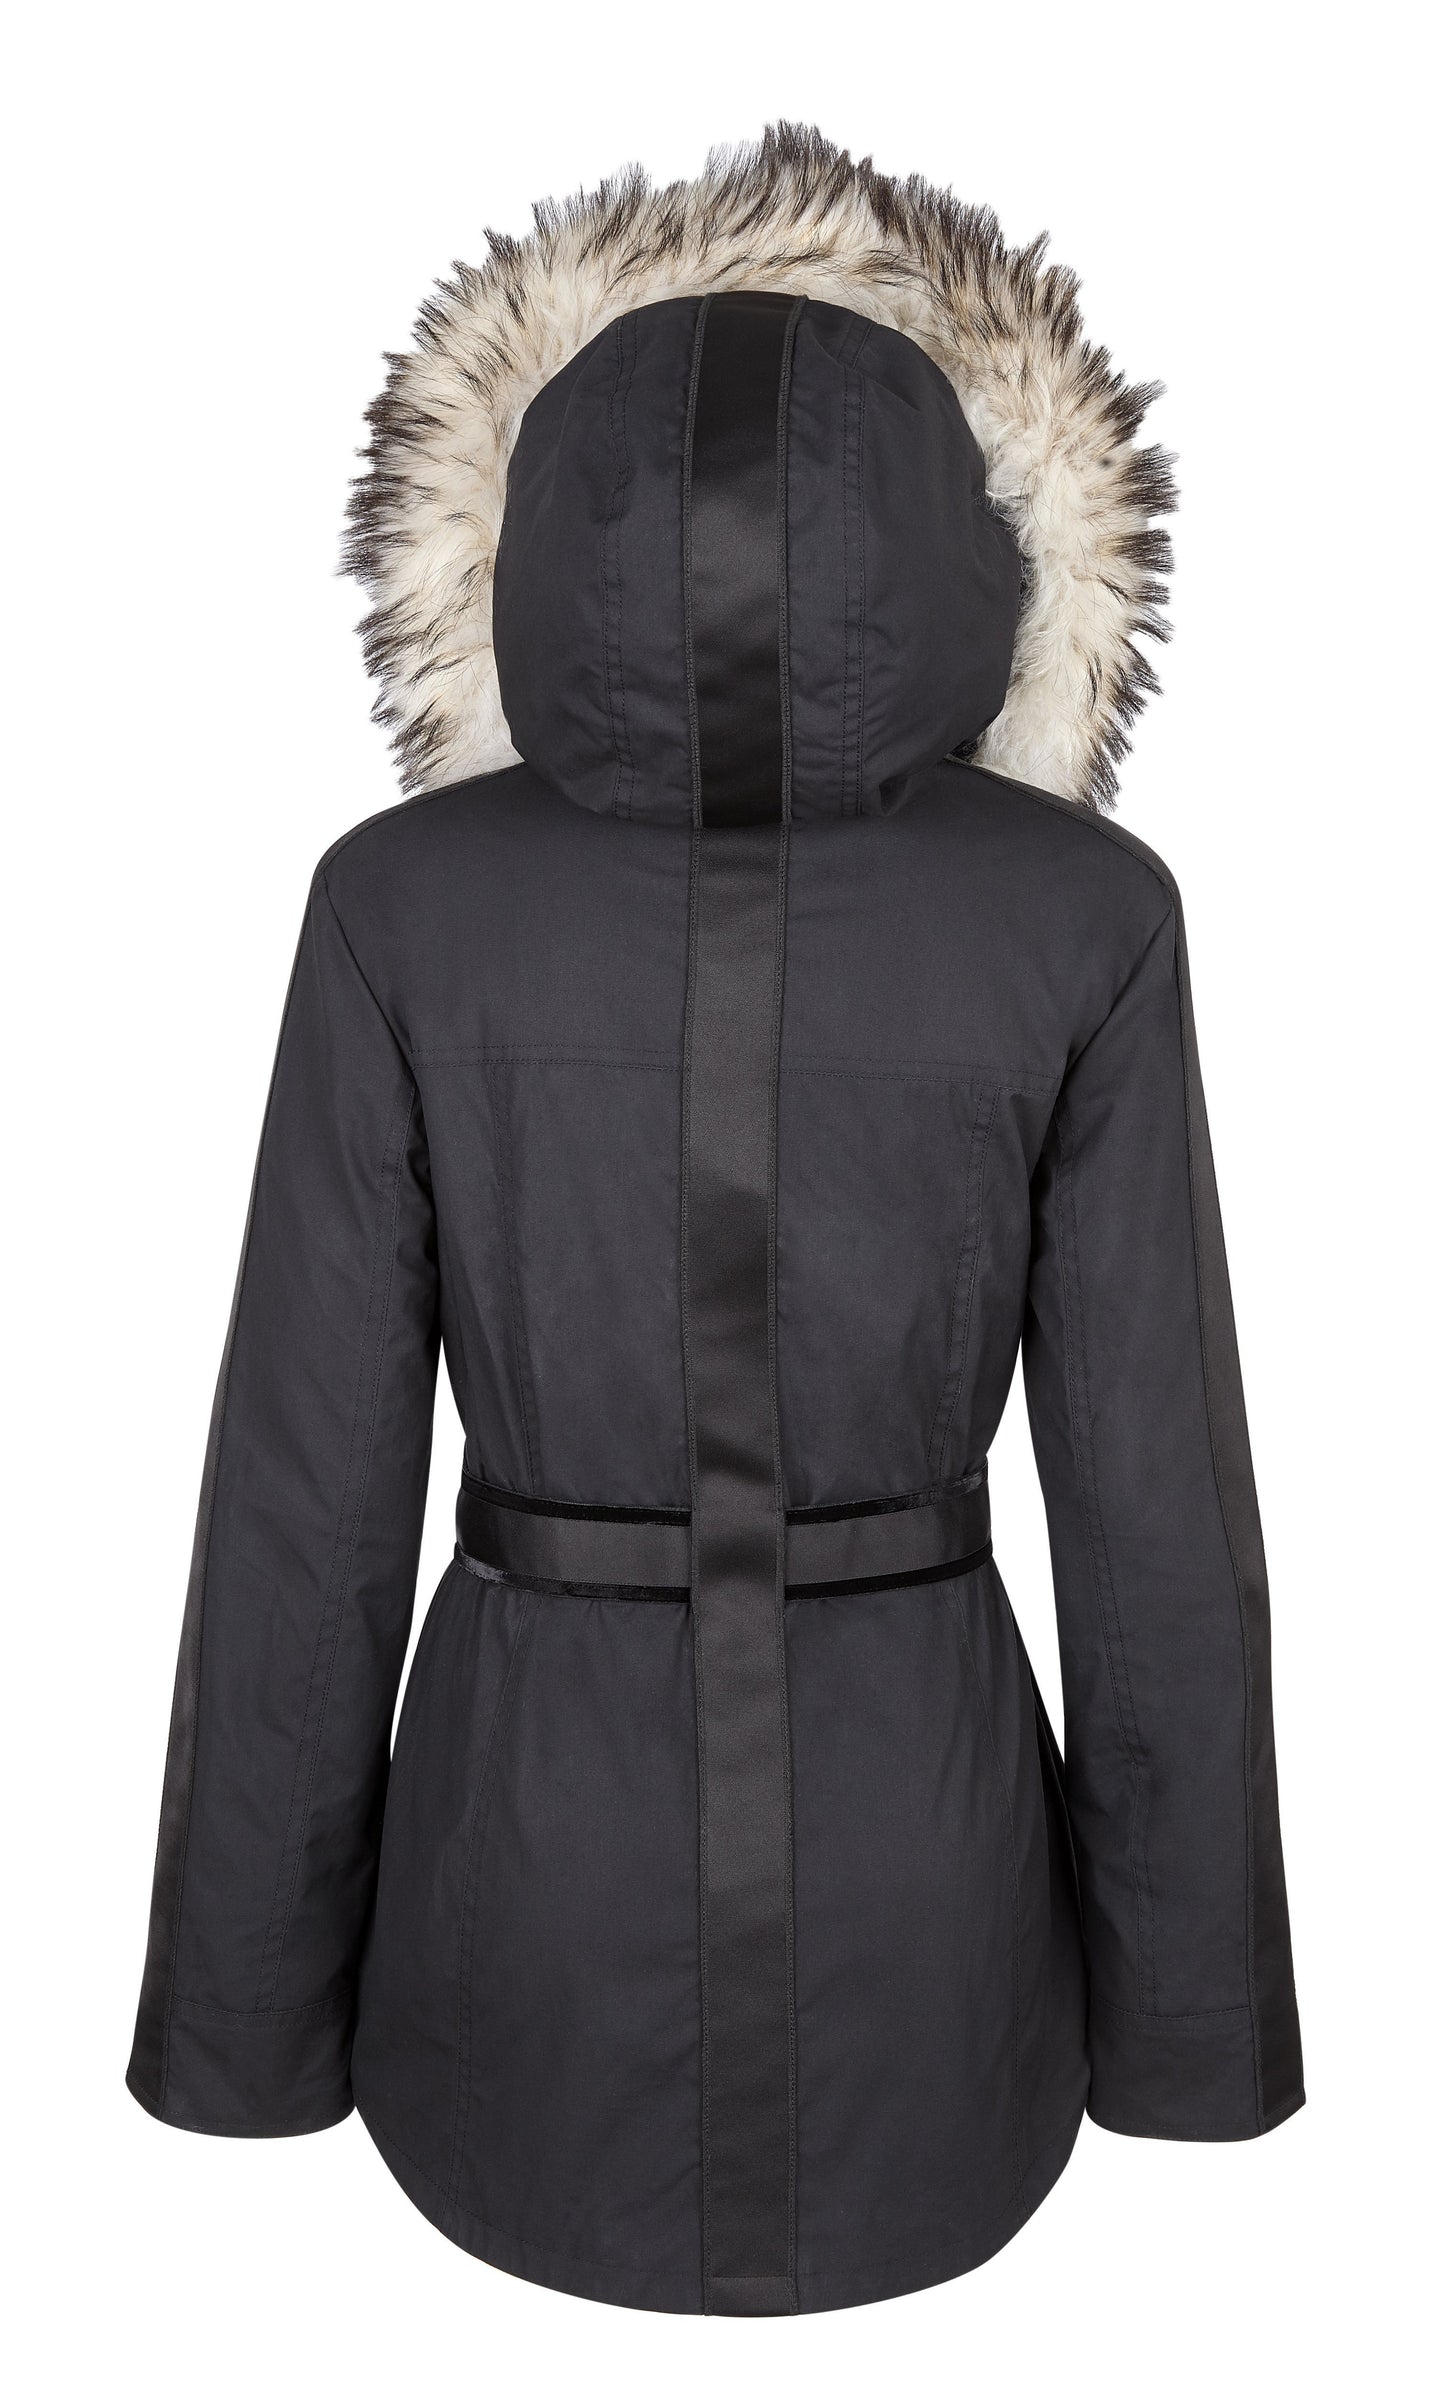 Wax Parka, Wax Jacket with Fur Trim, ski pass, belted, British Made Coat